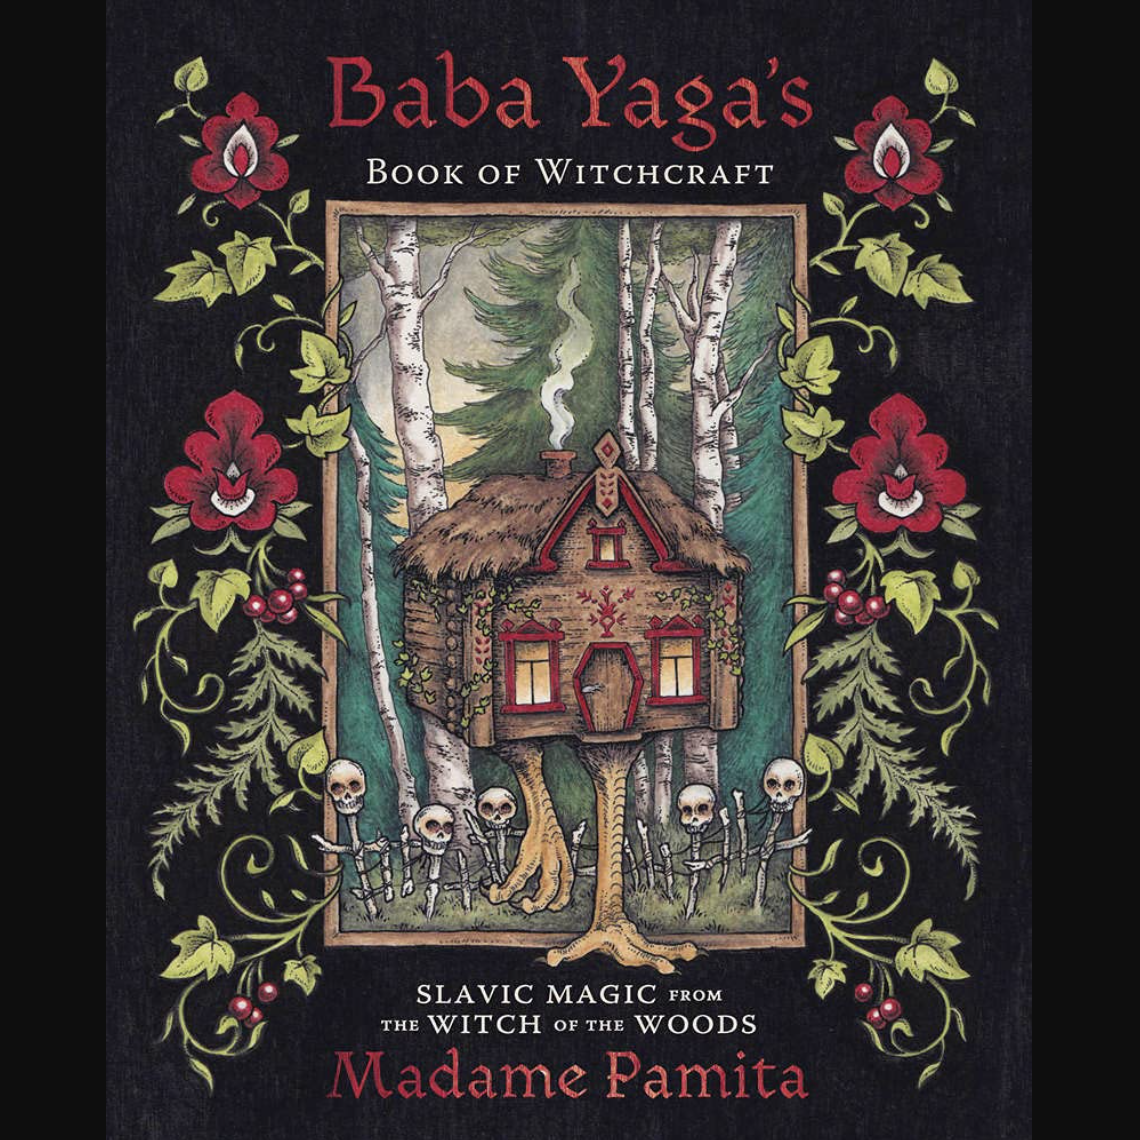 Baba Yaga's Book of Witchcraft by Madame Pamita